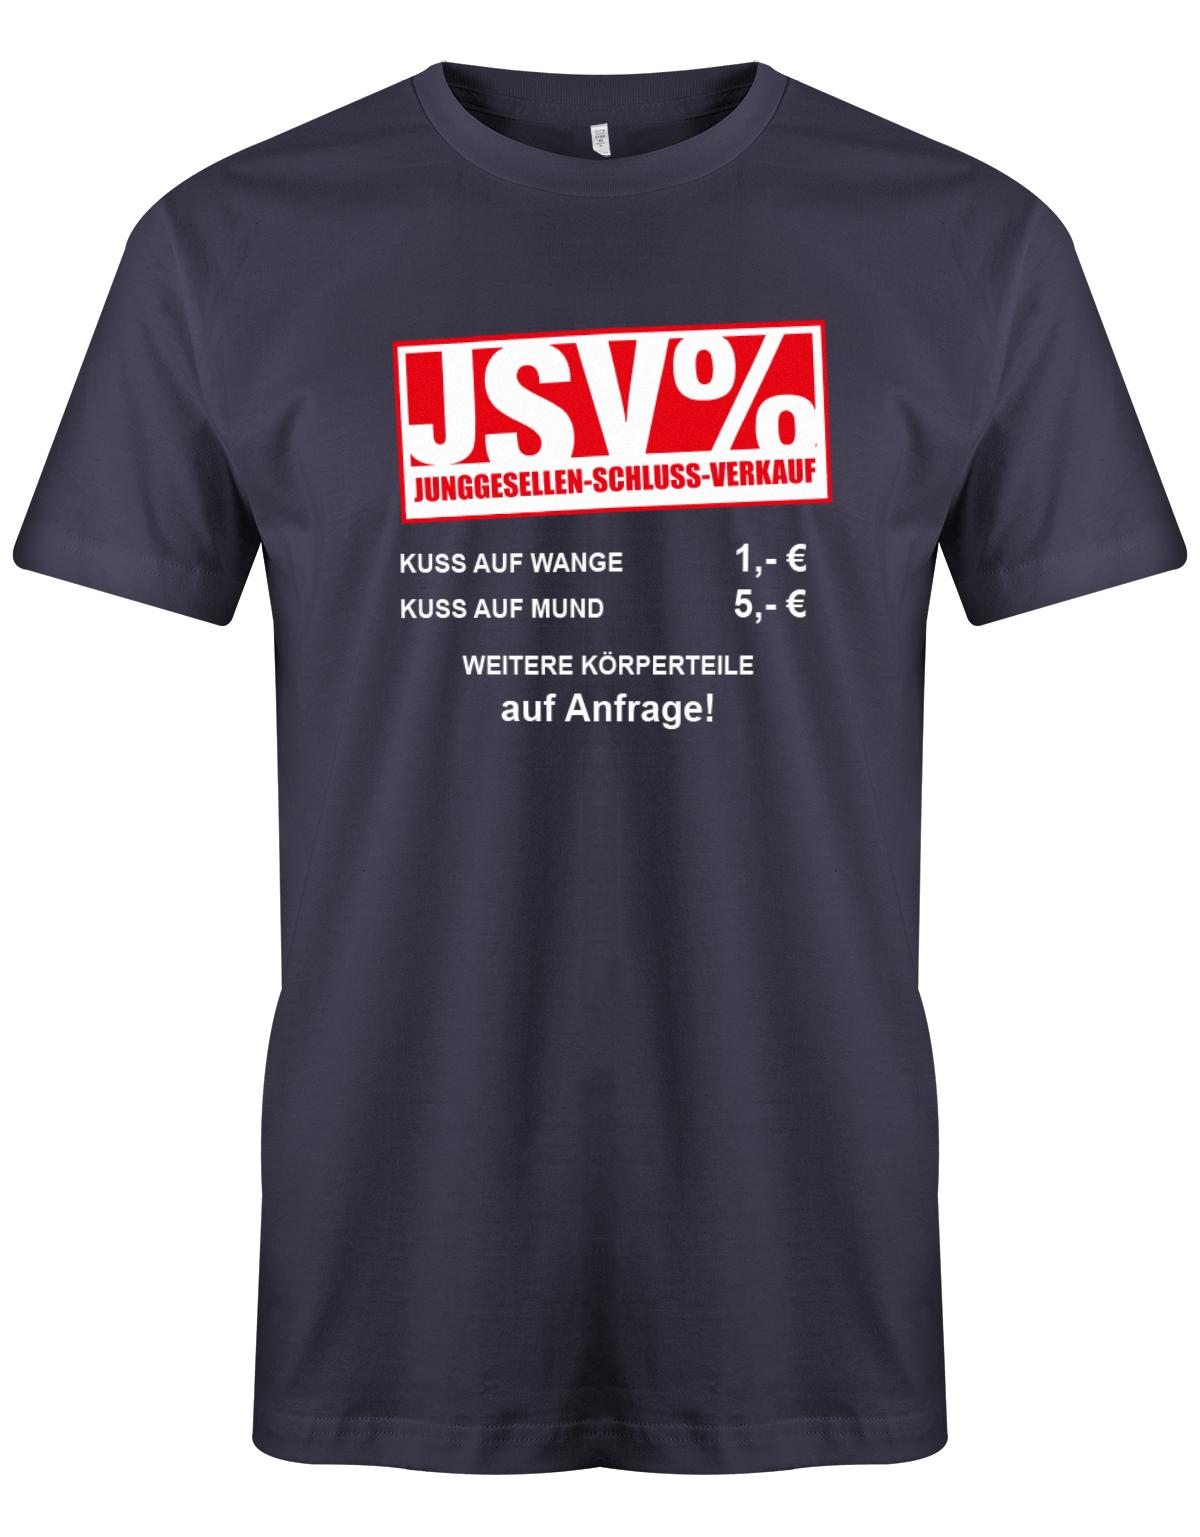 JSV-Kuss-auf-Wange-1-Euro-auf-Mund-5-Euro-Herren-JGA-Shirt-Navy